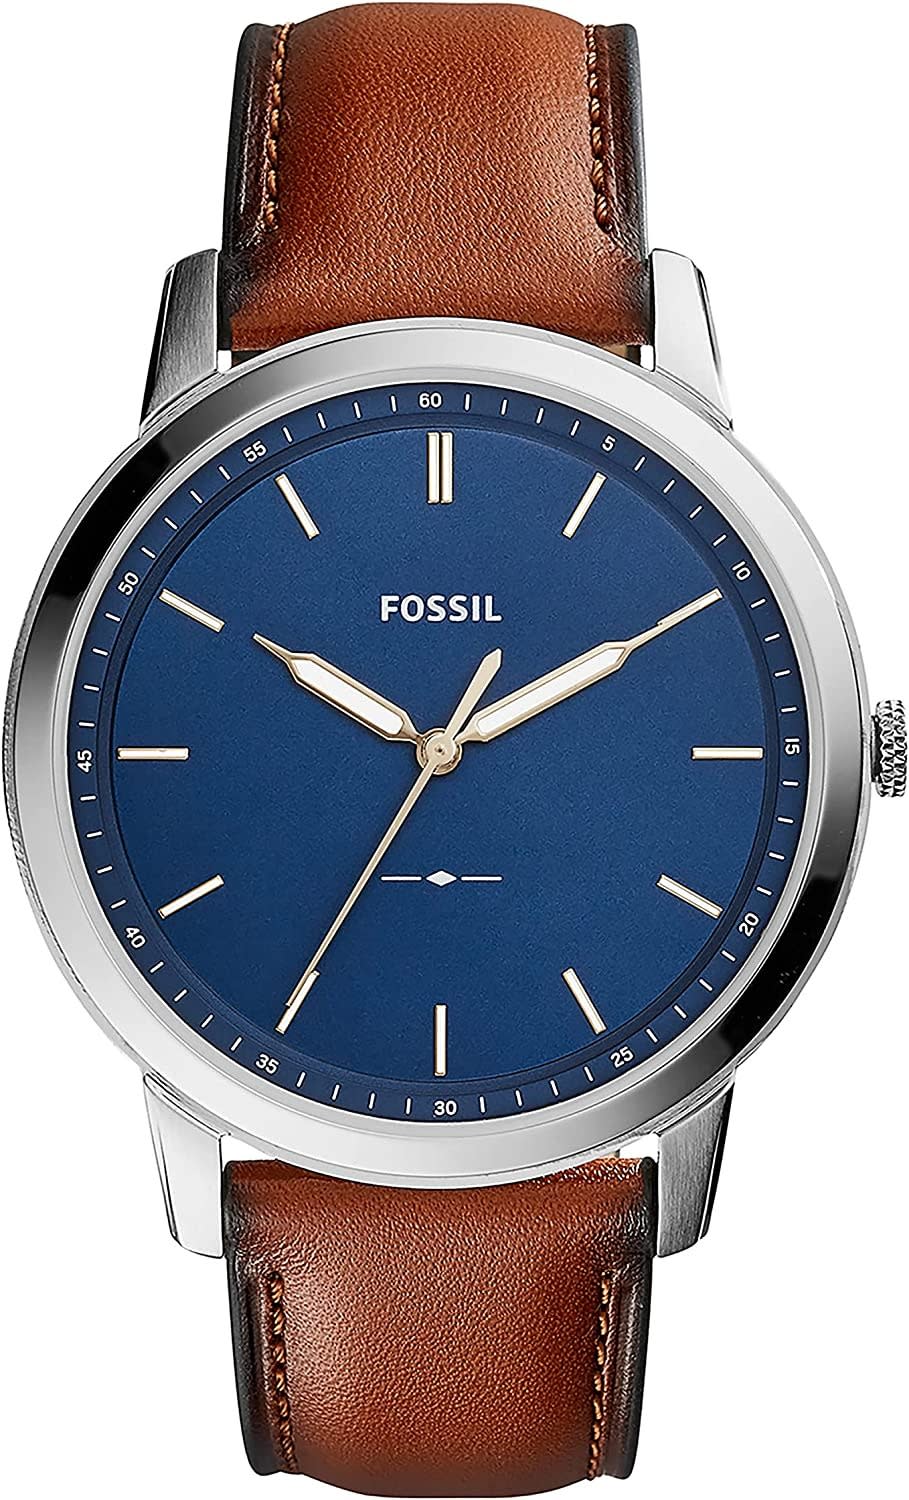 Fossil Men's The Minimalist Watch